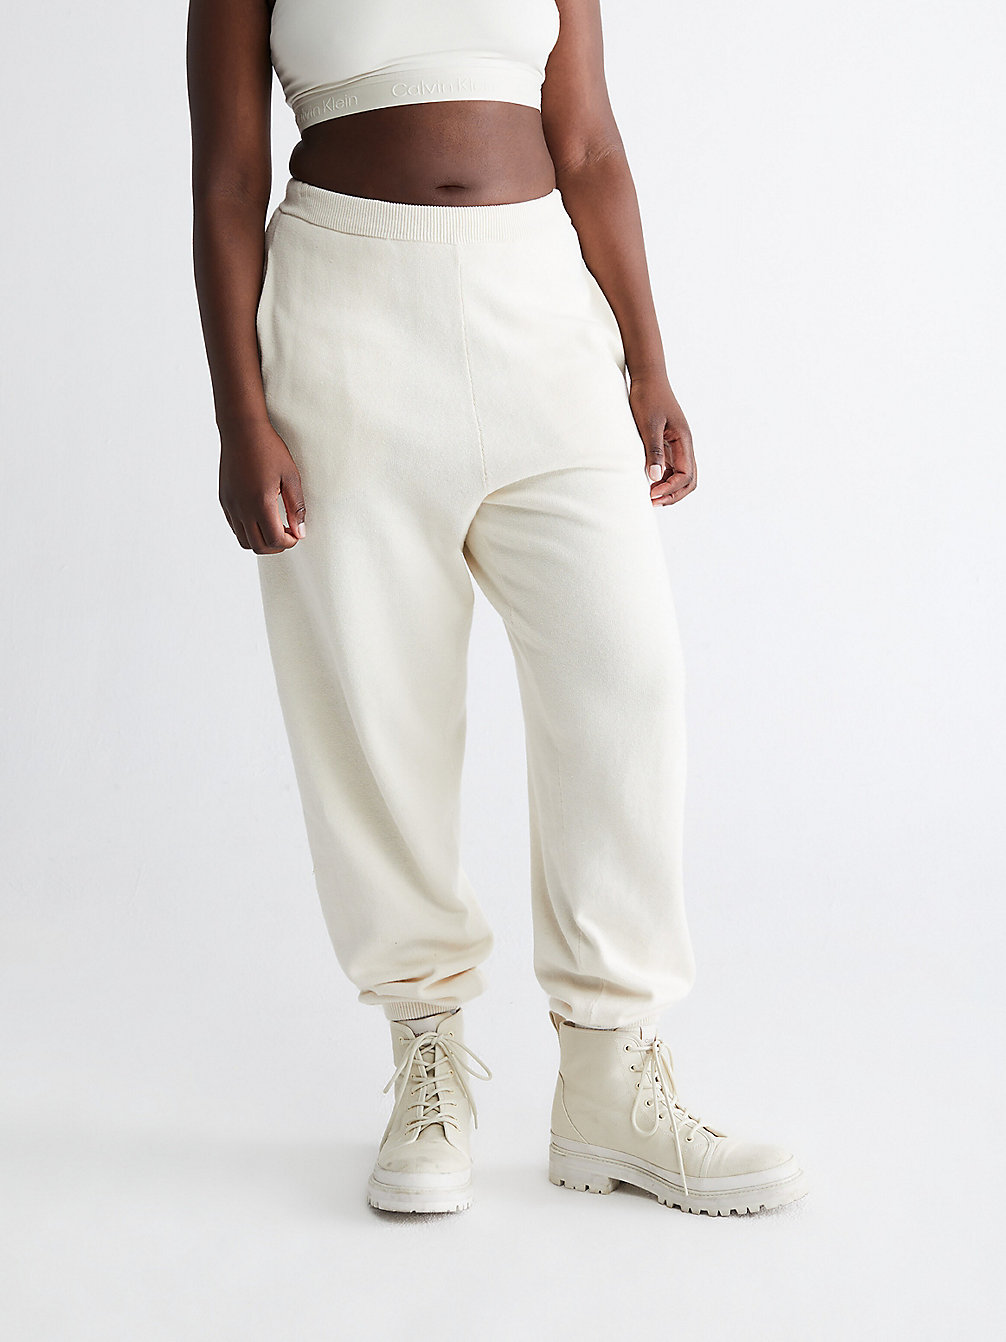 Pantaloni Da Tuta Unisex In Misto Cotone Lana > BONE WHITE > undefined unisex > Calvin Klein